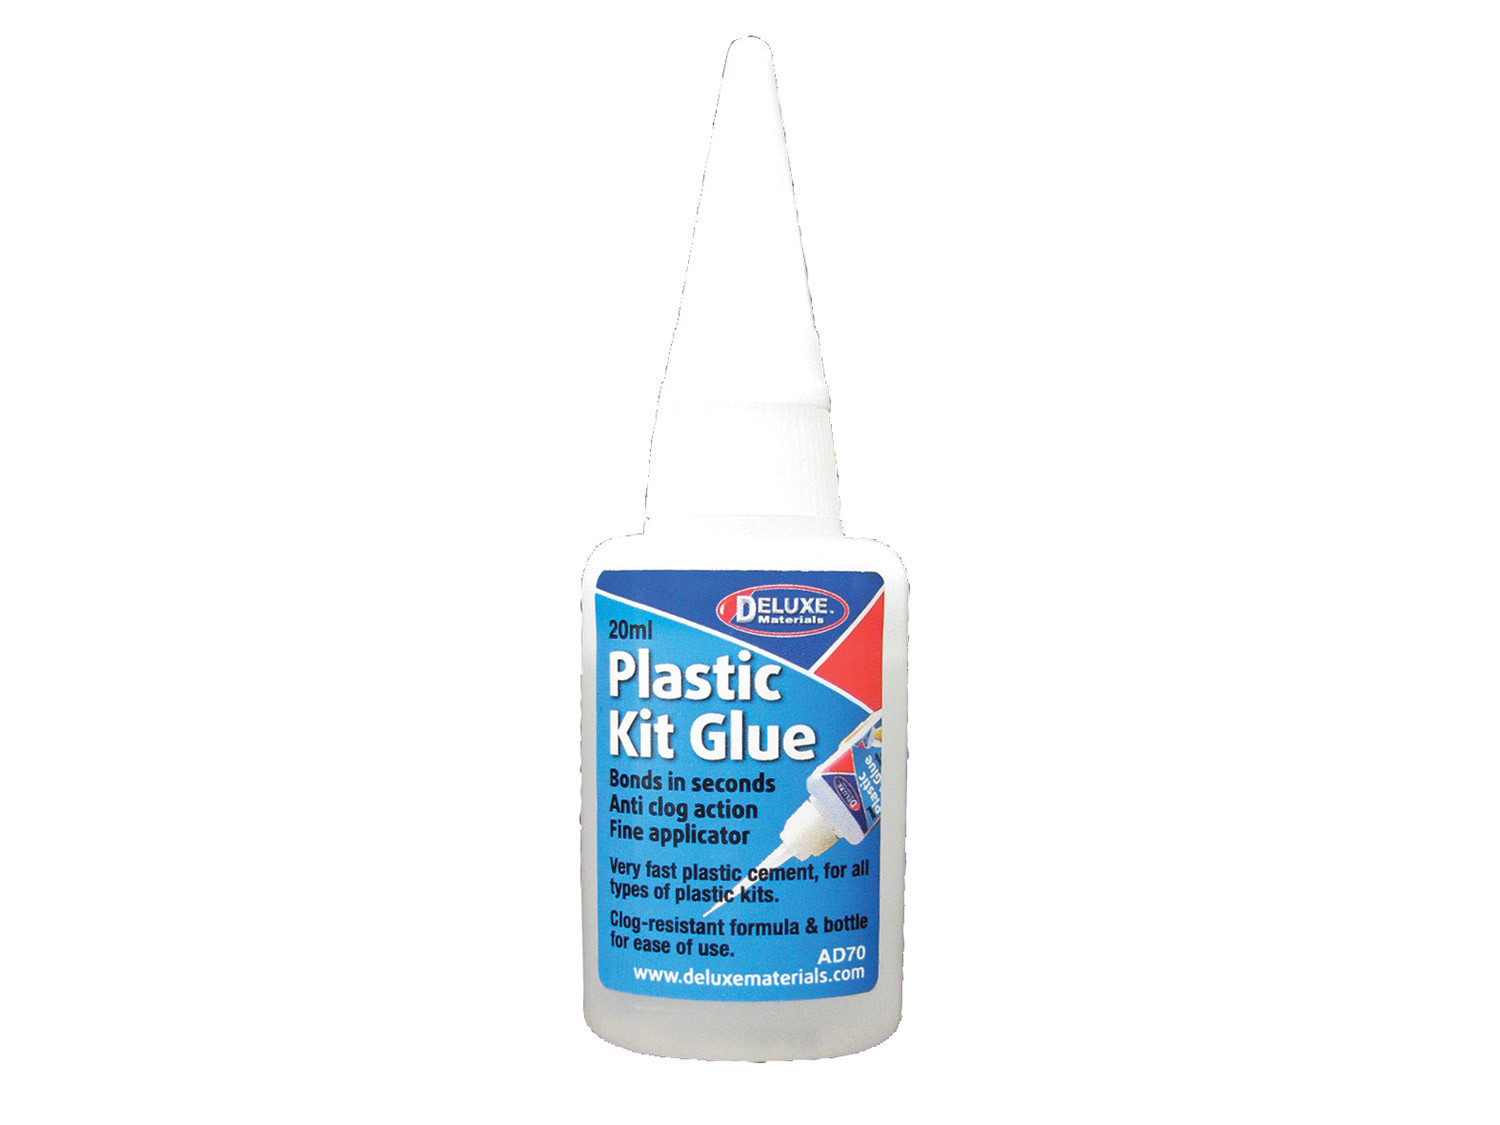 Plastic Kit Glue (20ml)